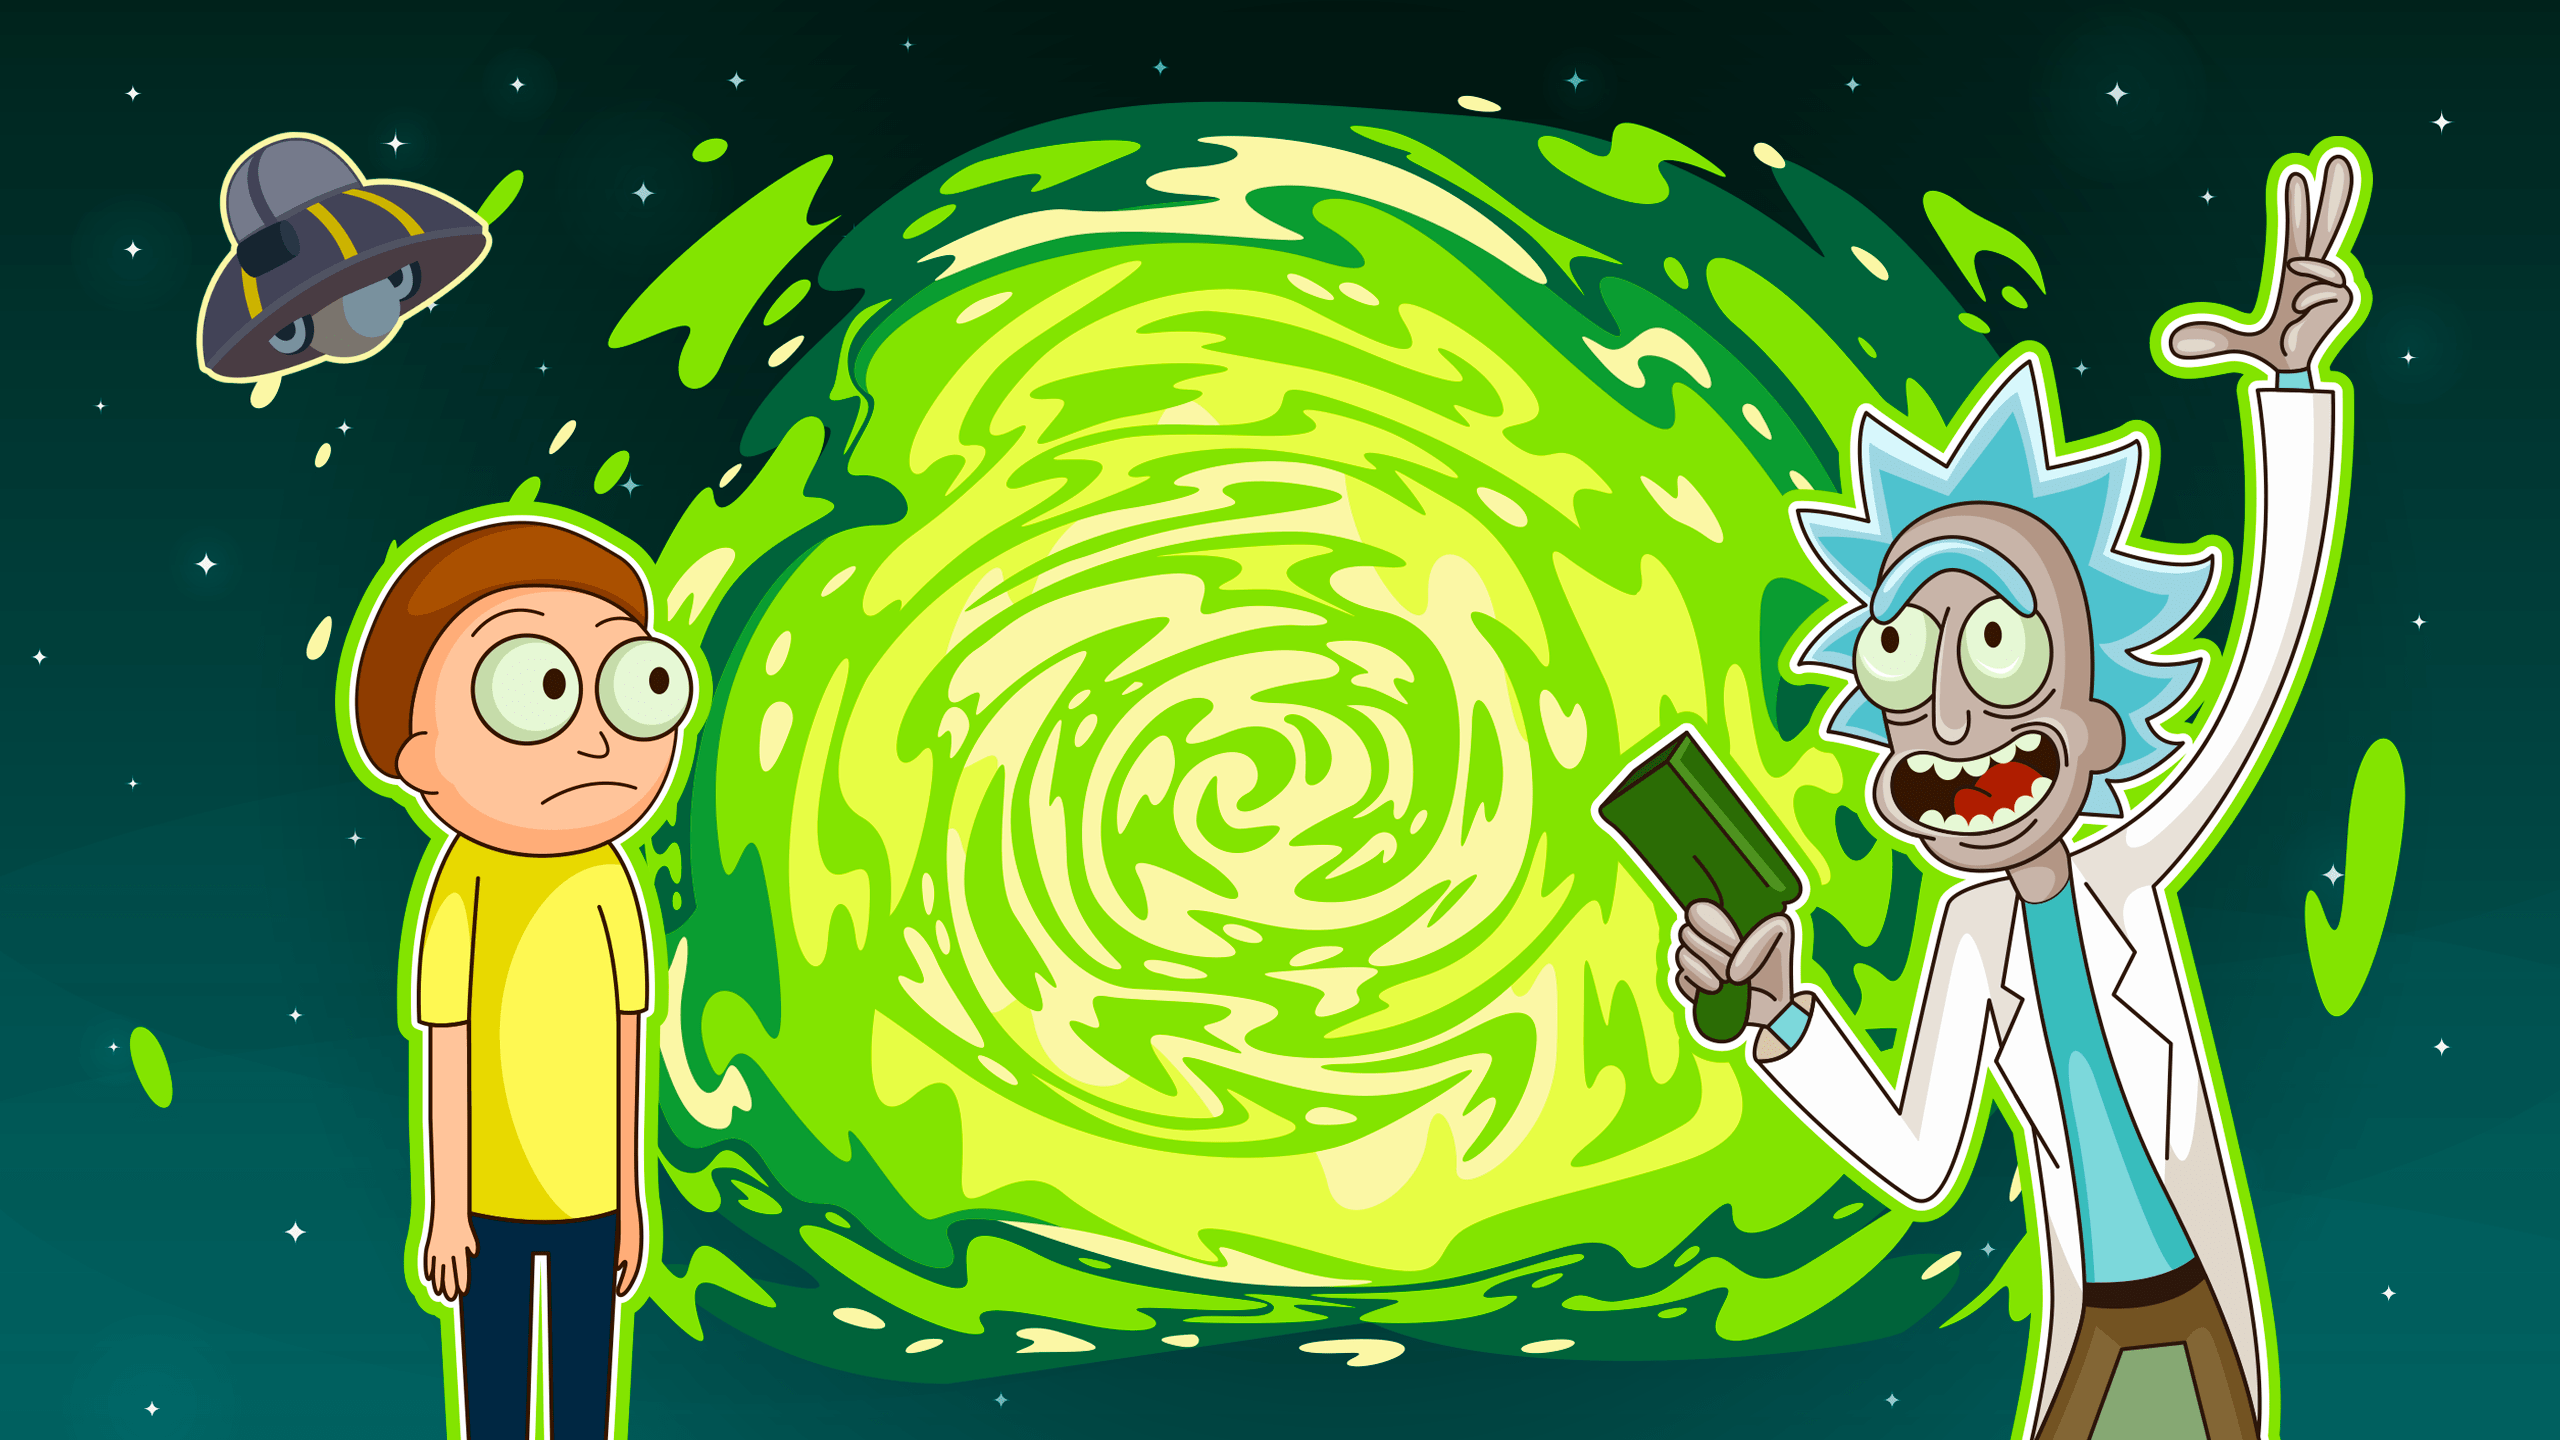 Free Wallpaper Rick and Morty